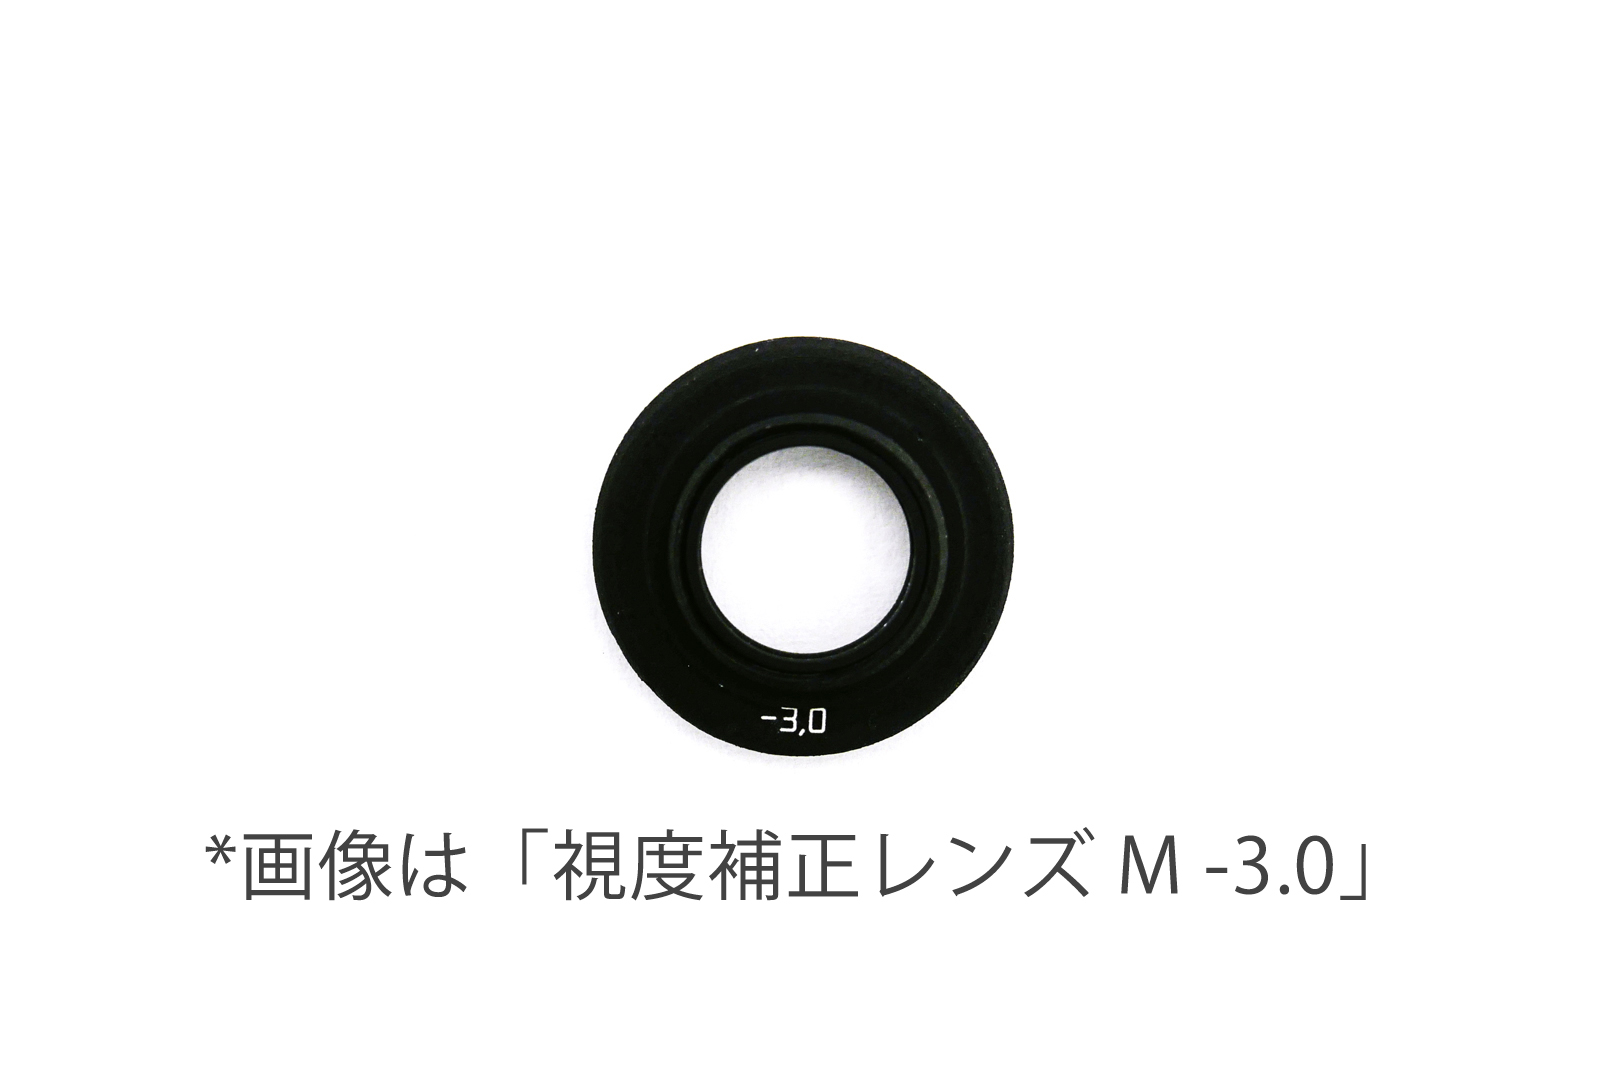 LEICA 視度補正レンズ-3.0 14359